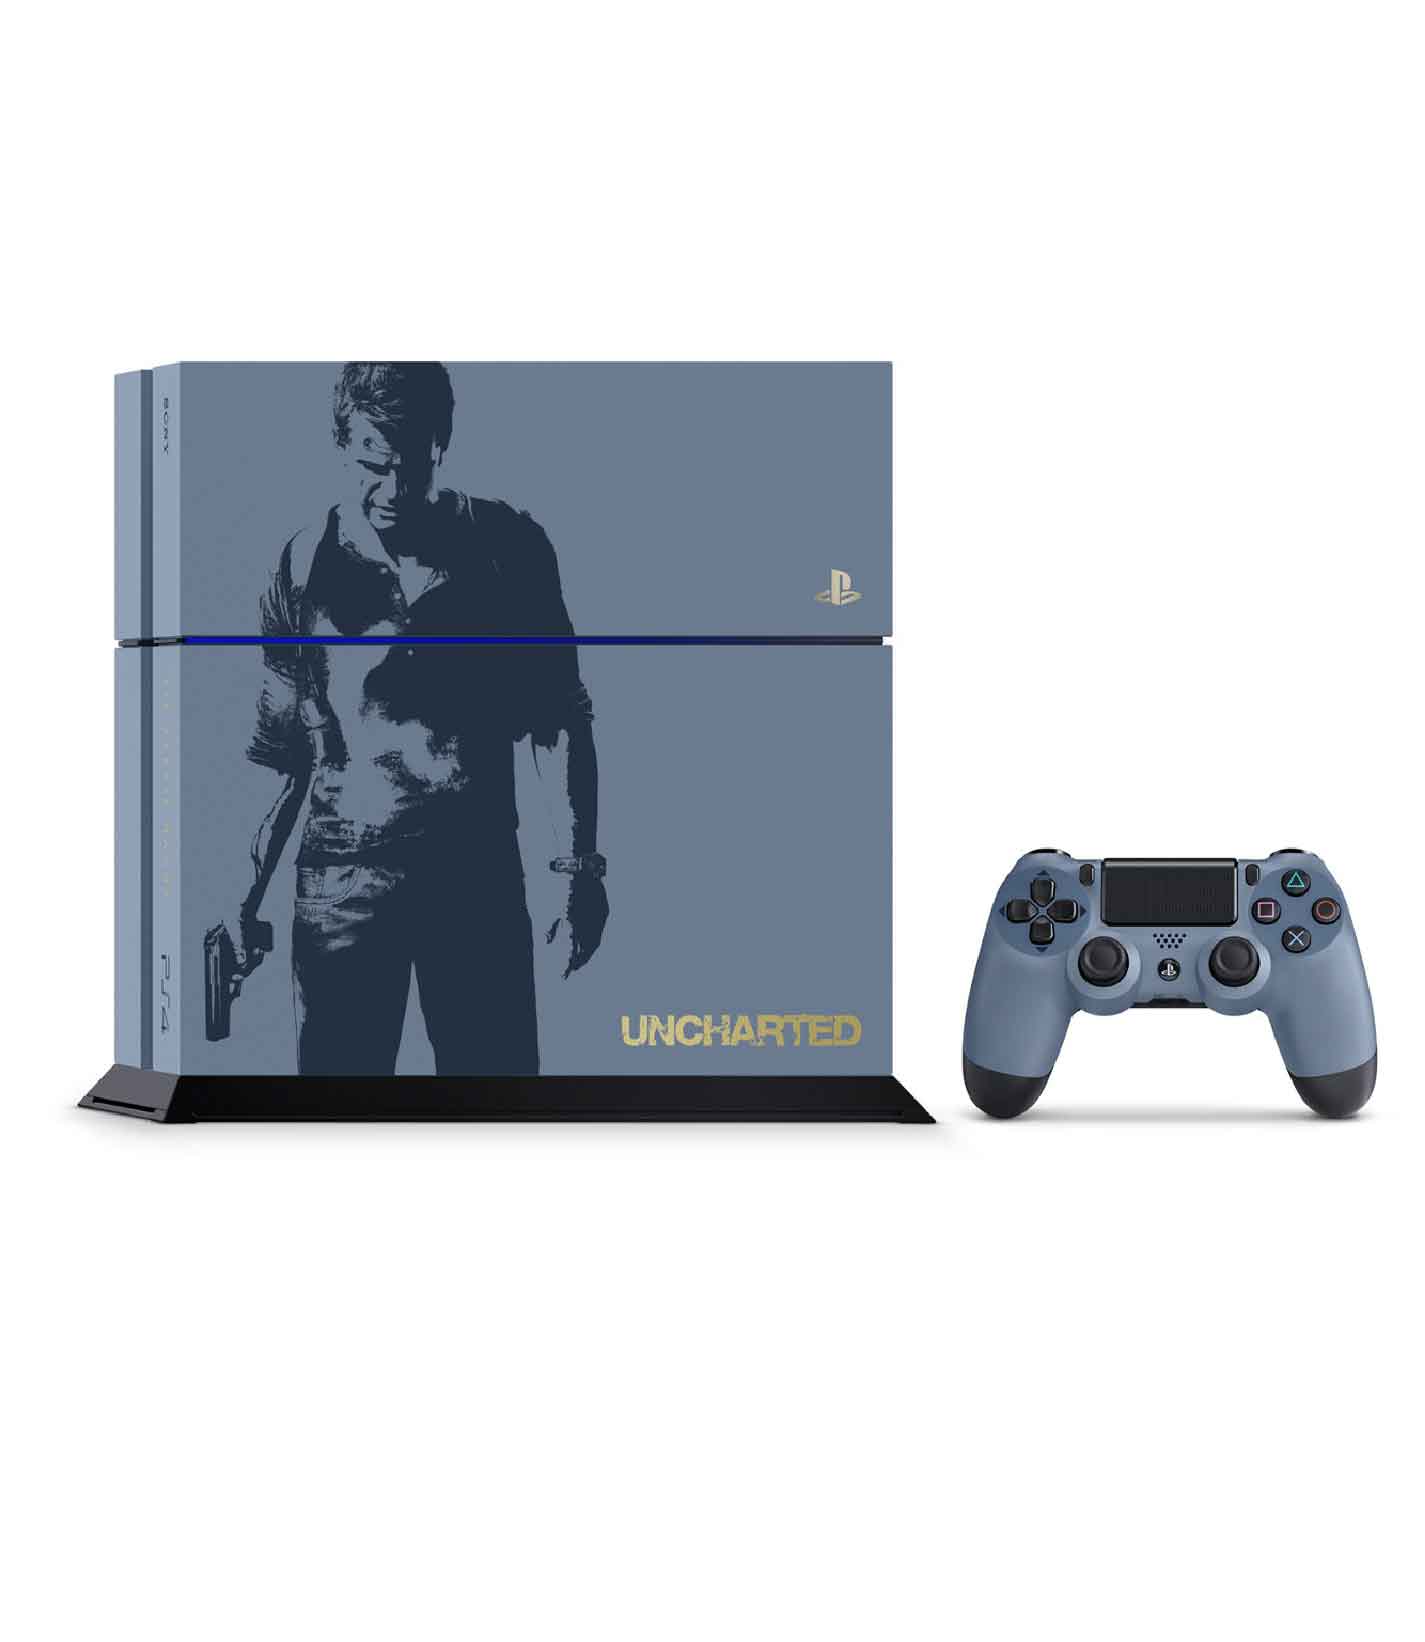 Sony Playstation (PS4) Uncharted Limited Edition Bundle RetroPixl